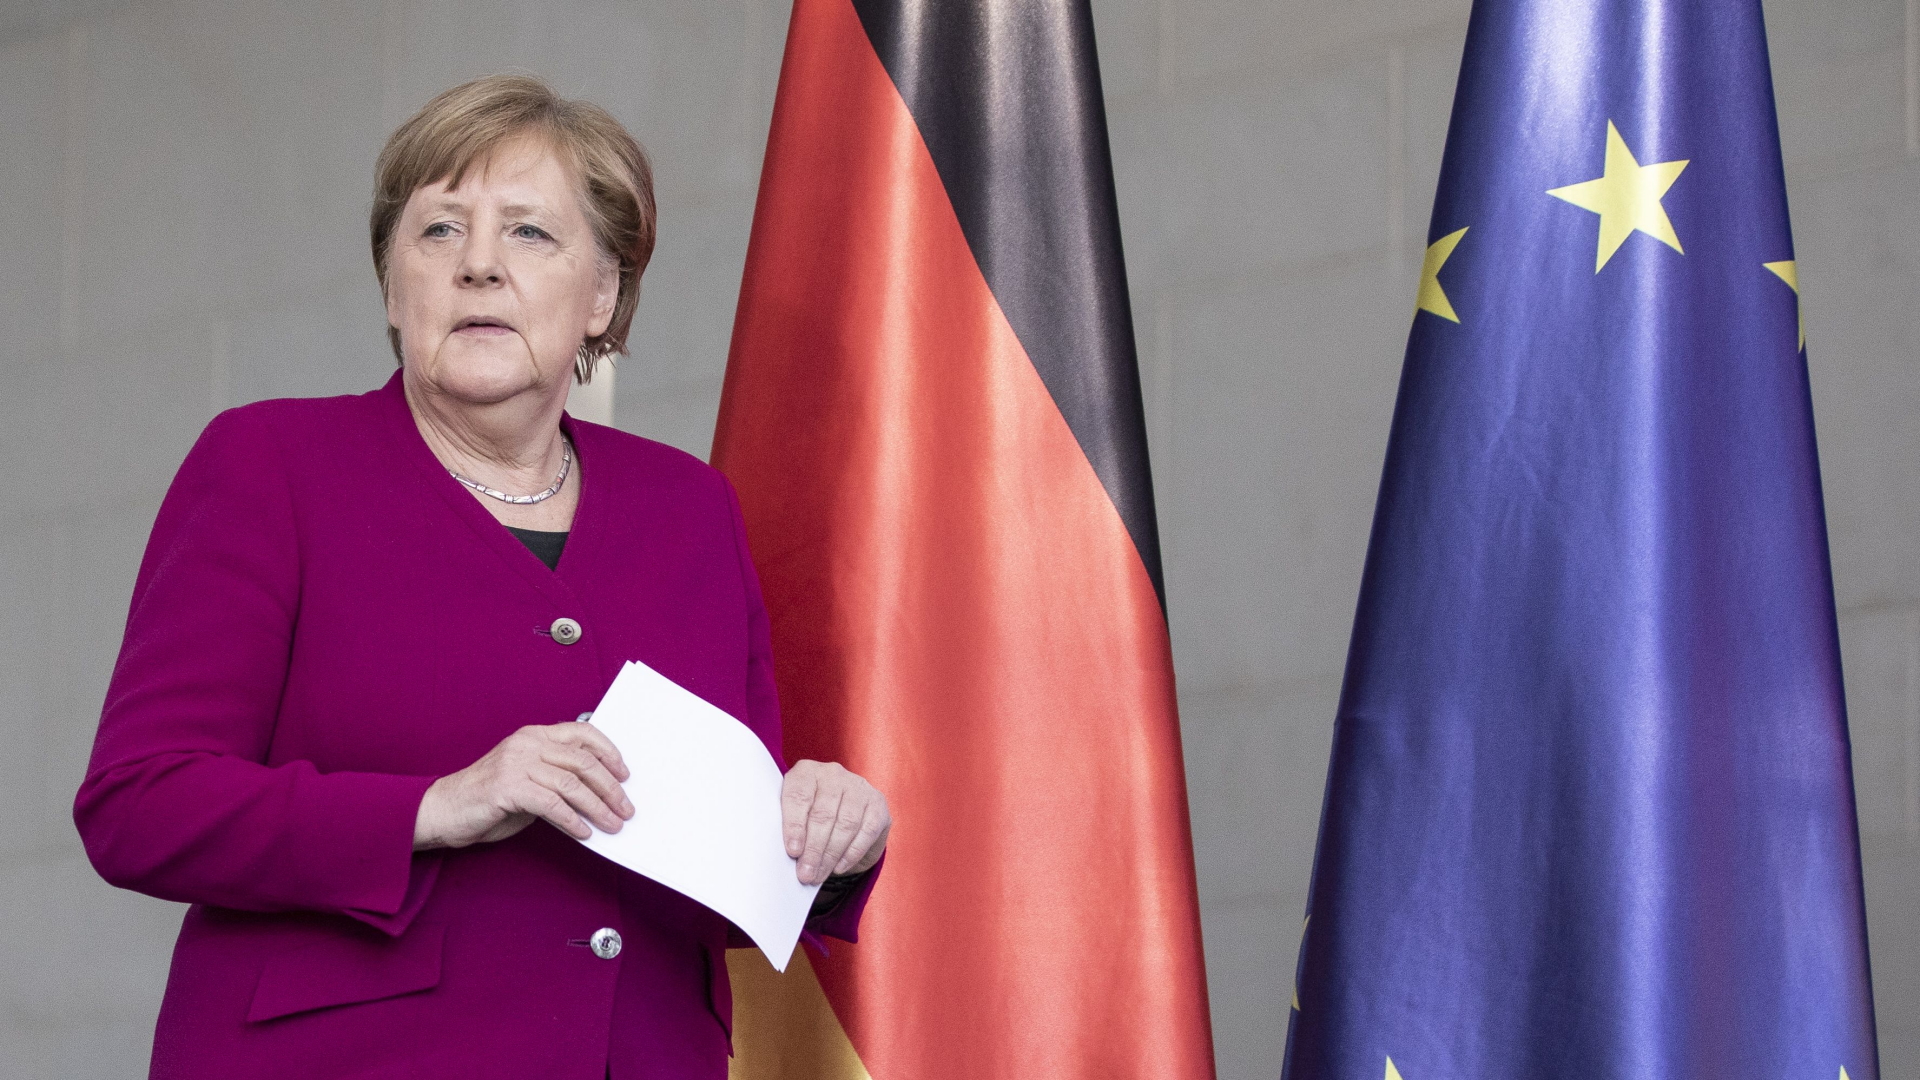 Bundeskanzlerin Angela Merkel | MAJA HITIJ/POOL/EPA-EFE/Shutters